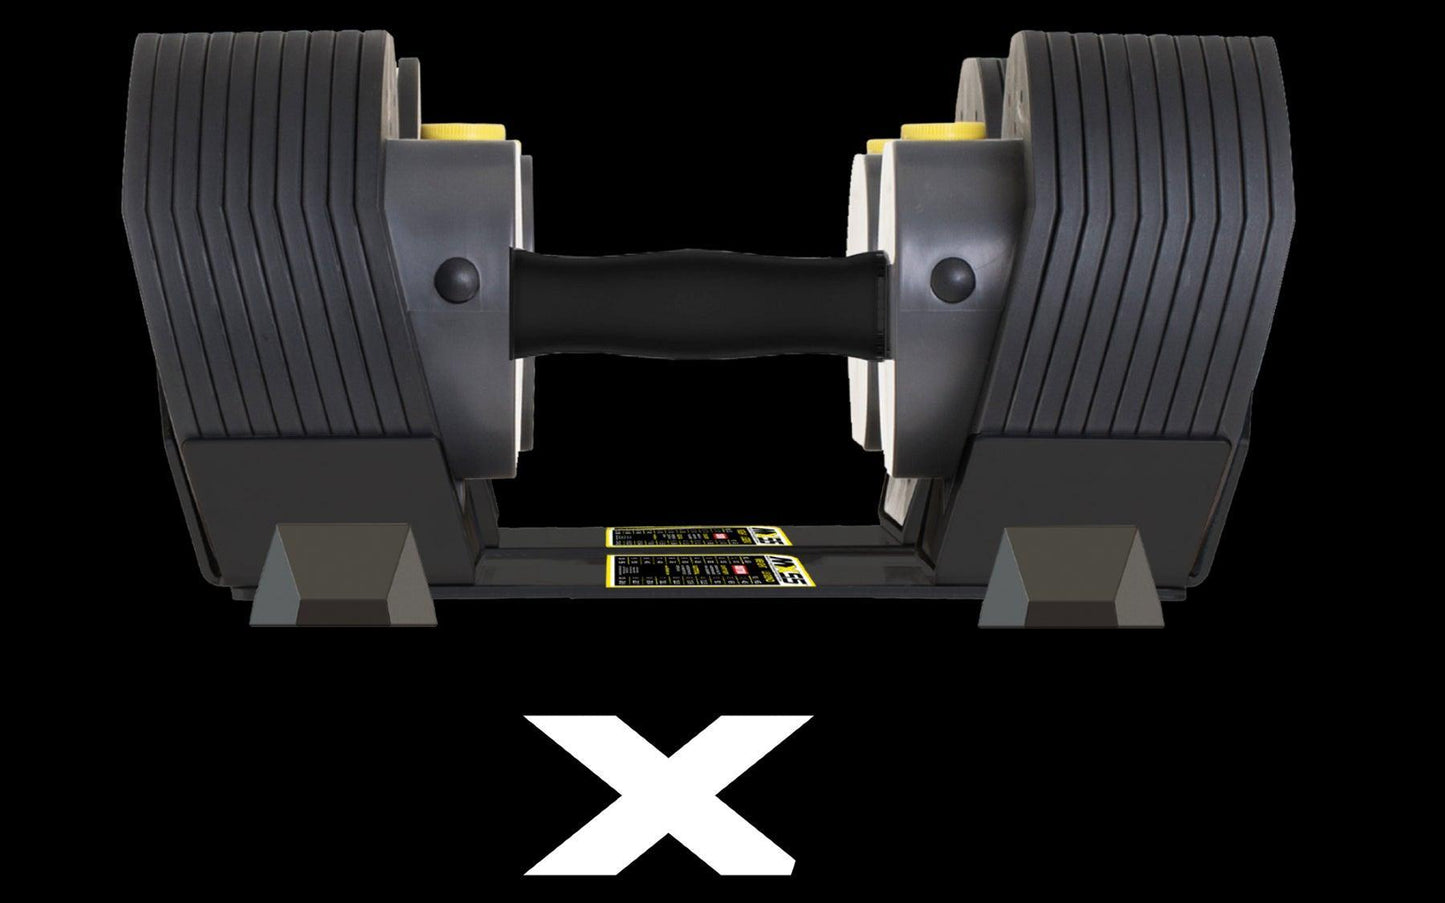 MX55 Rapid Change Adjustable Dumbbells